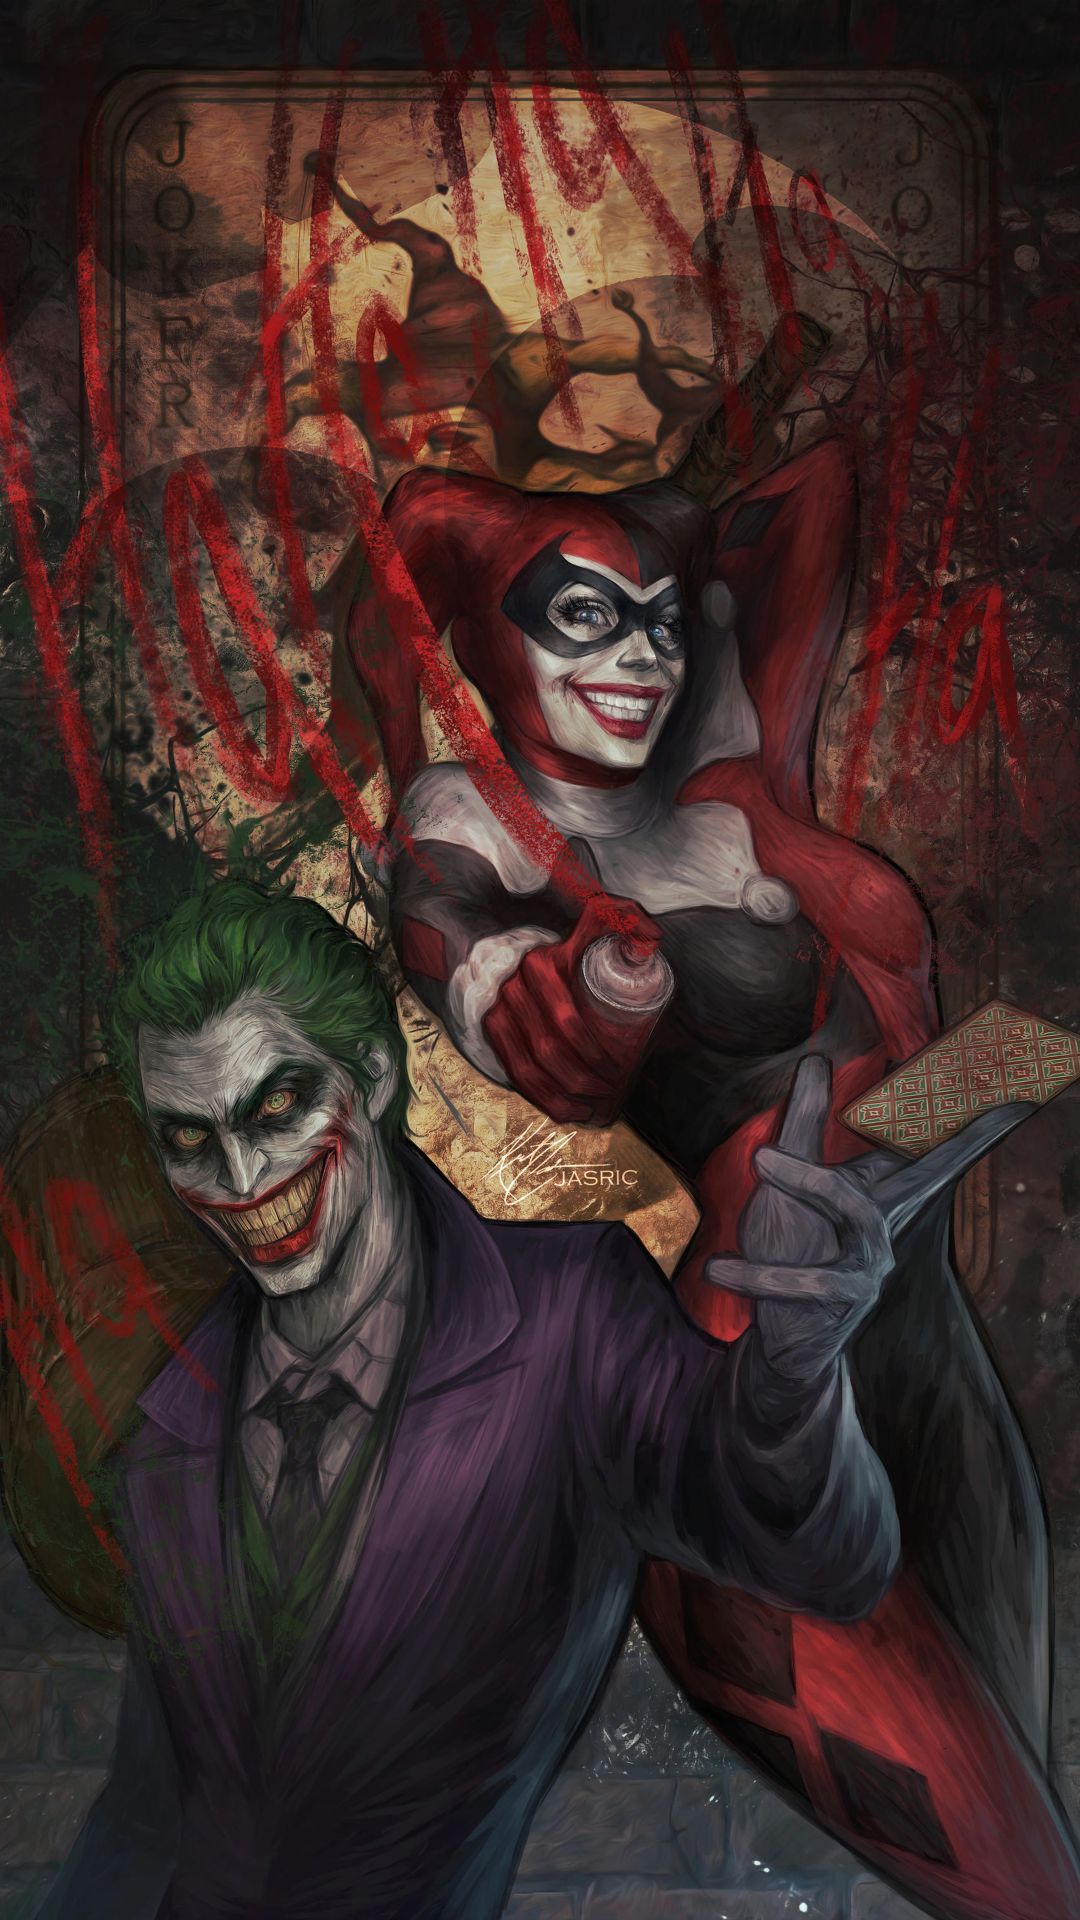 Joker and Harley Quinn Wallpapers - Top 25 Best Joker and Harley Quinn  Backgrounds Download